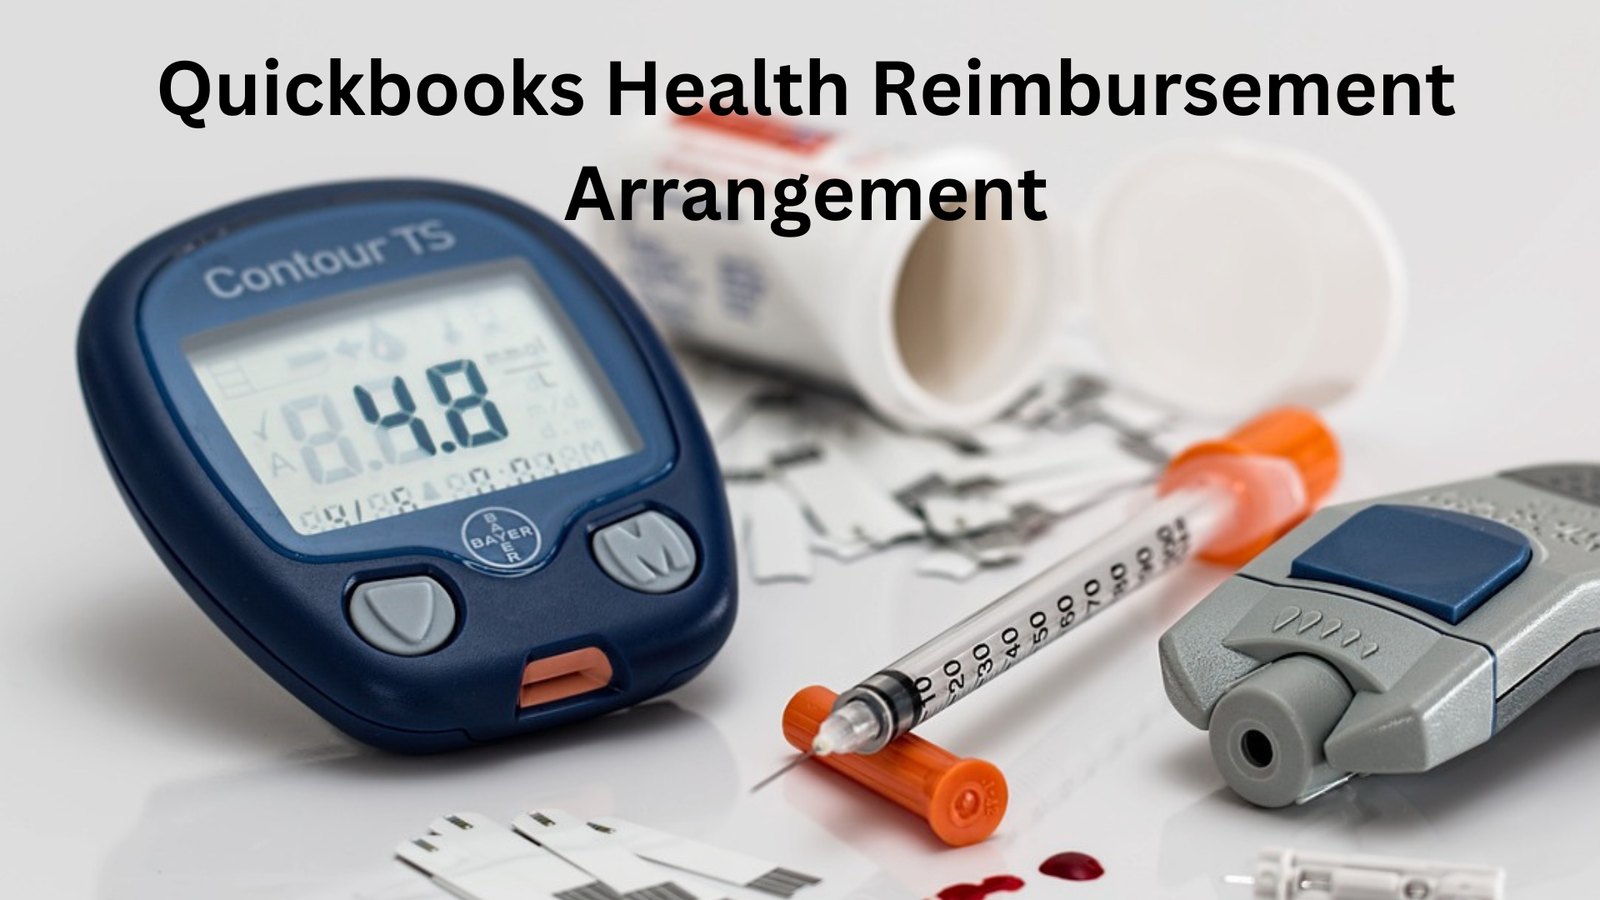 Quickbooks Health Reimbursement Arrangement Guide